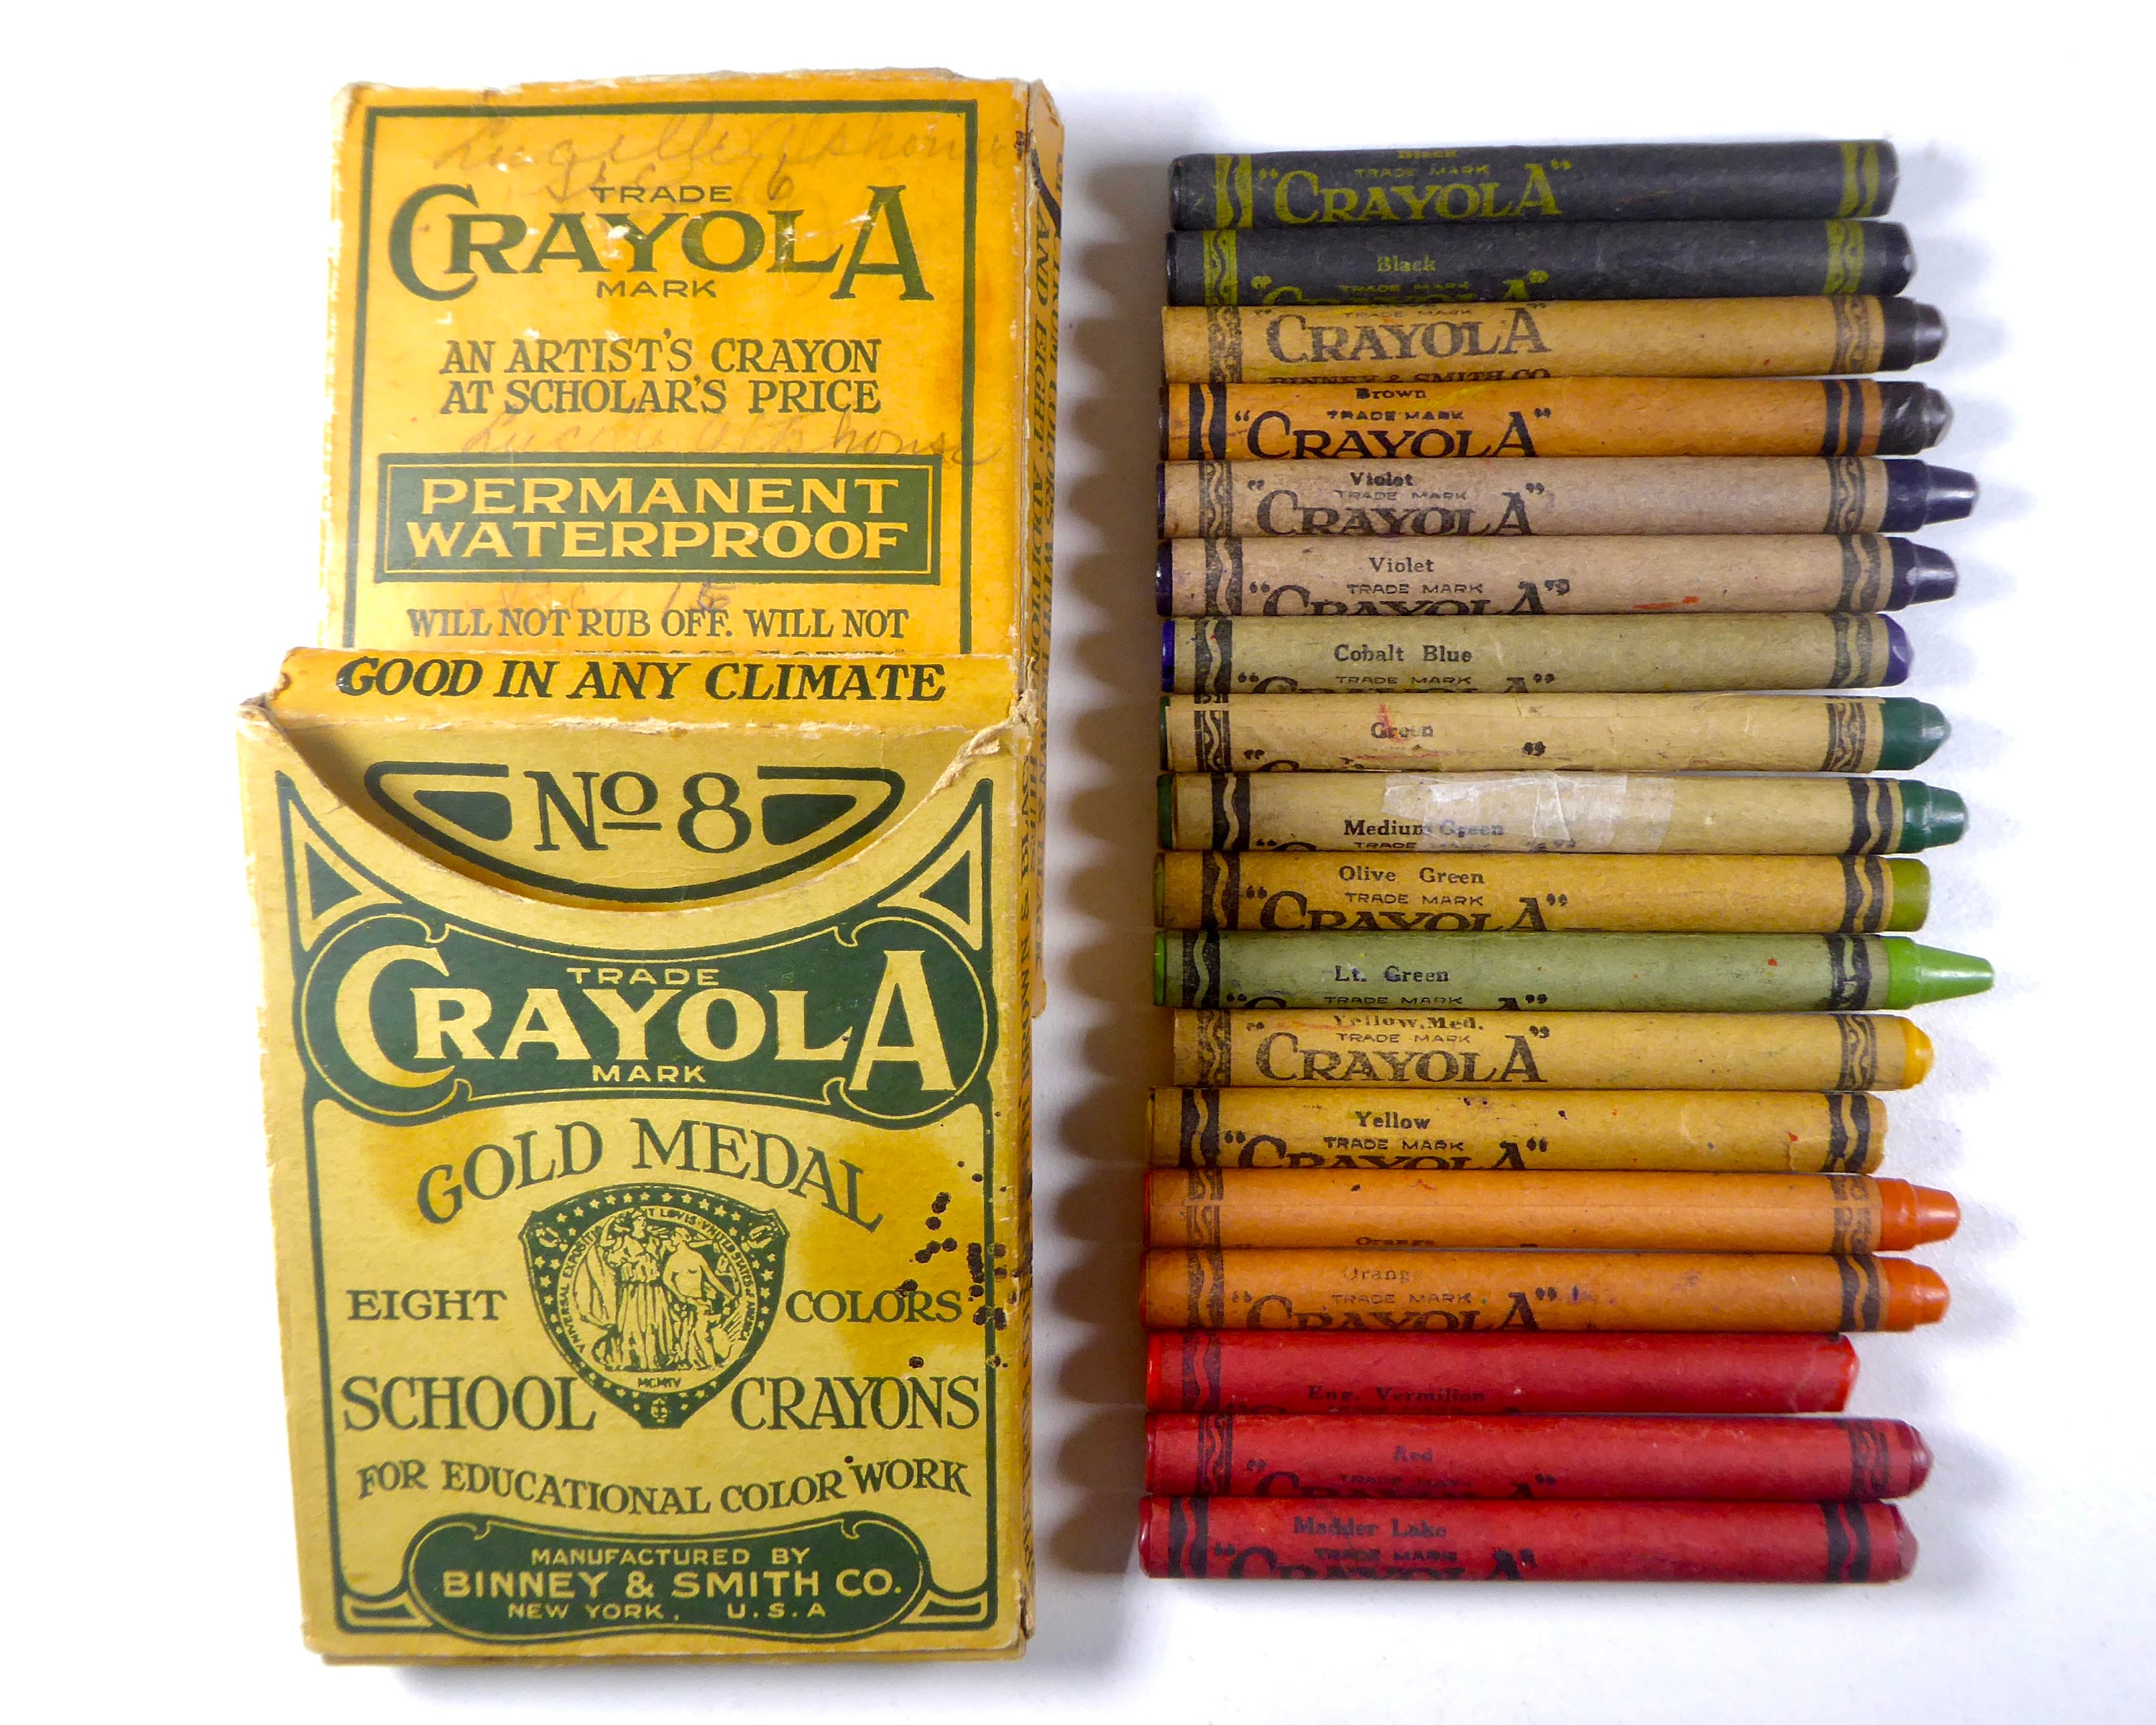 Scarlet Crayons - 45 crayons - Crayola Crayons - Bulk Crayons - Refill -  classroom - coloring - crayon